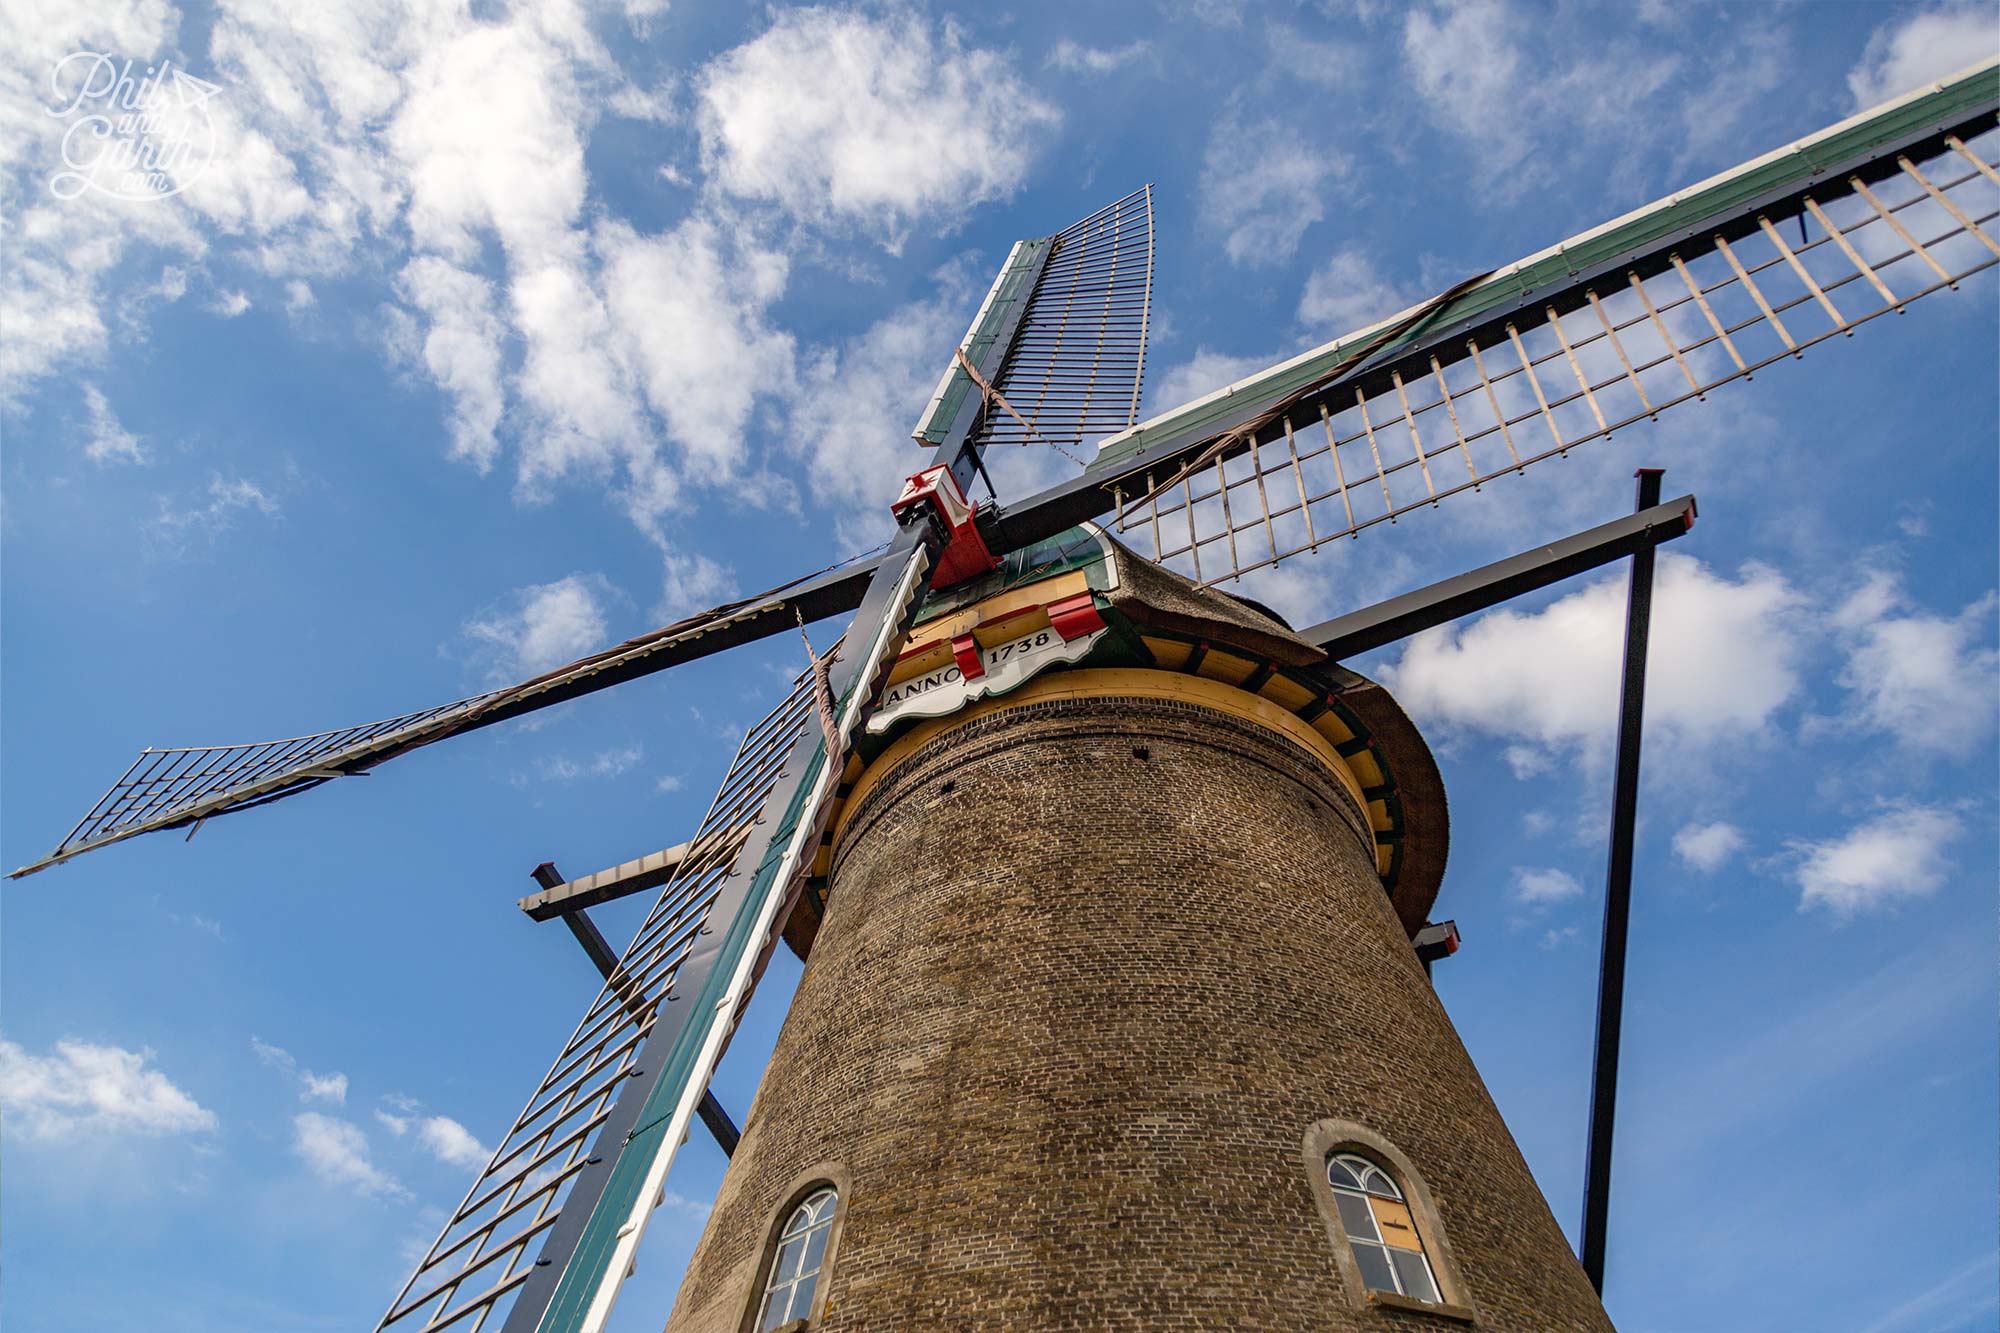 The Nederwaard mill was built in 1738